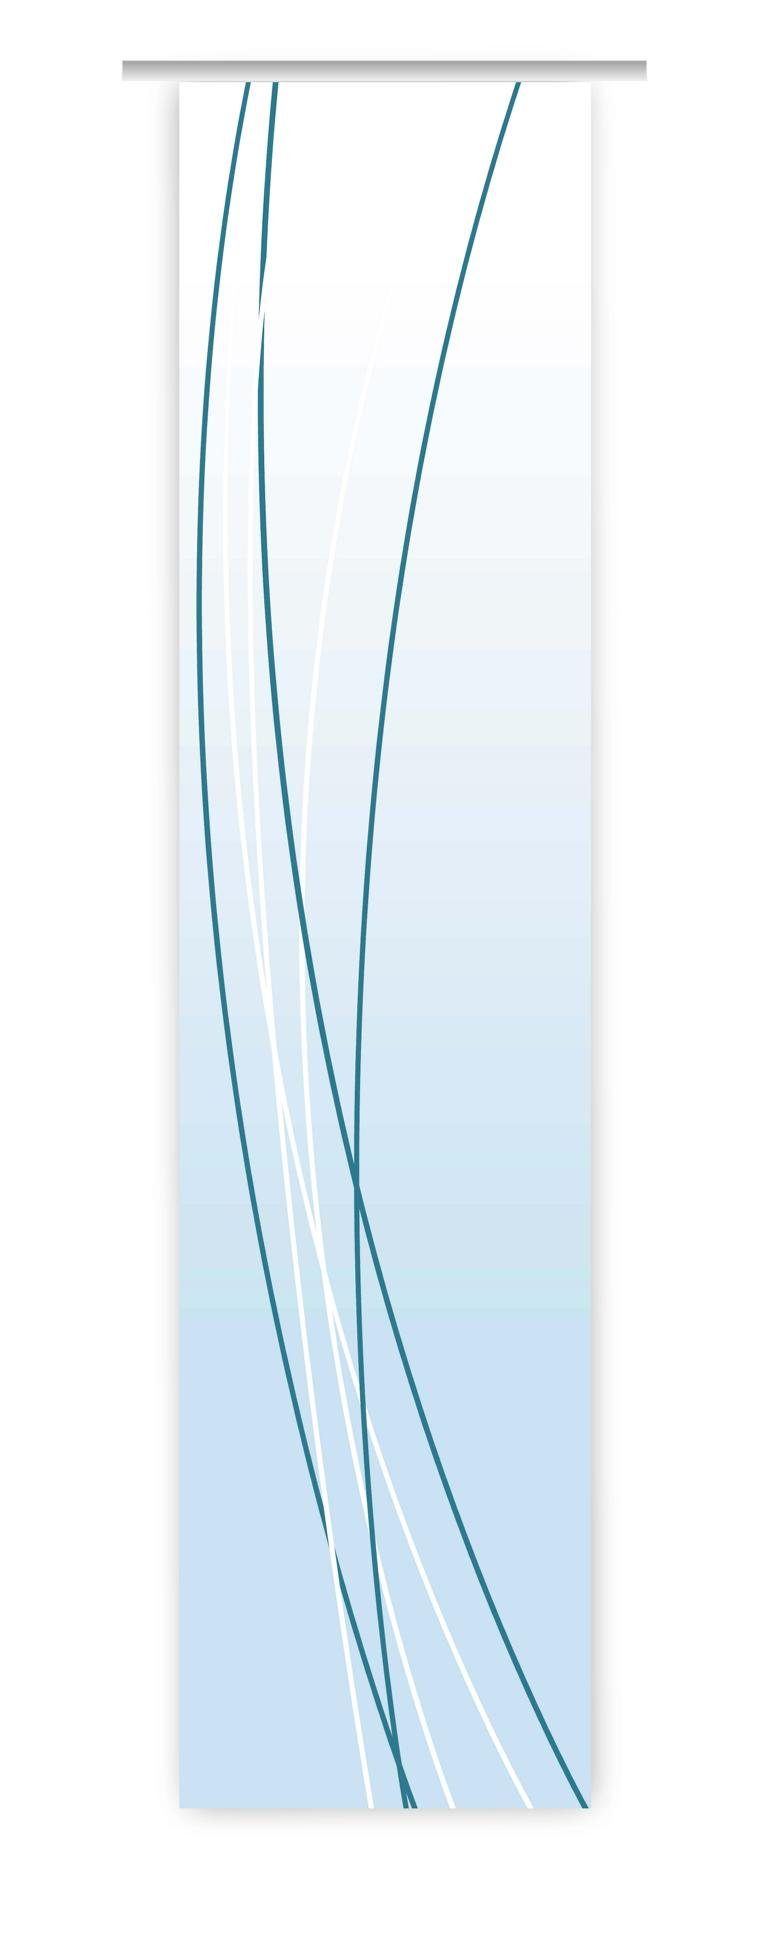 Schiebegardine Schiebevorhang 260 cm lang - Linea blue xtra up - B-line,  gardinen-for-life | Schiebegardinen